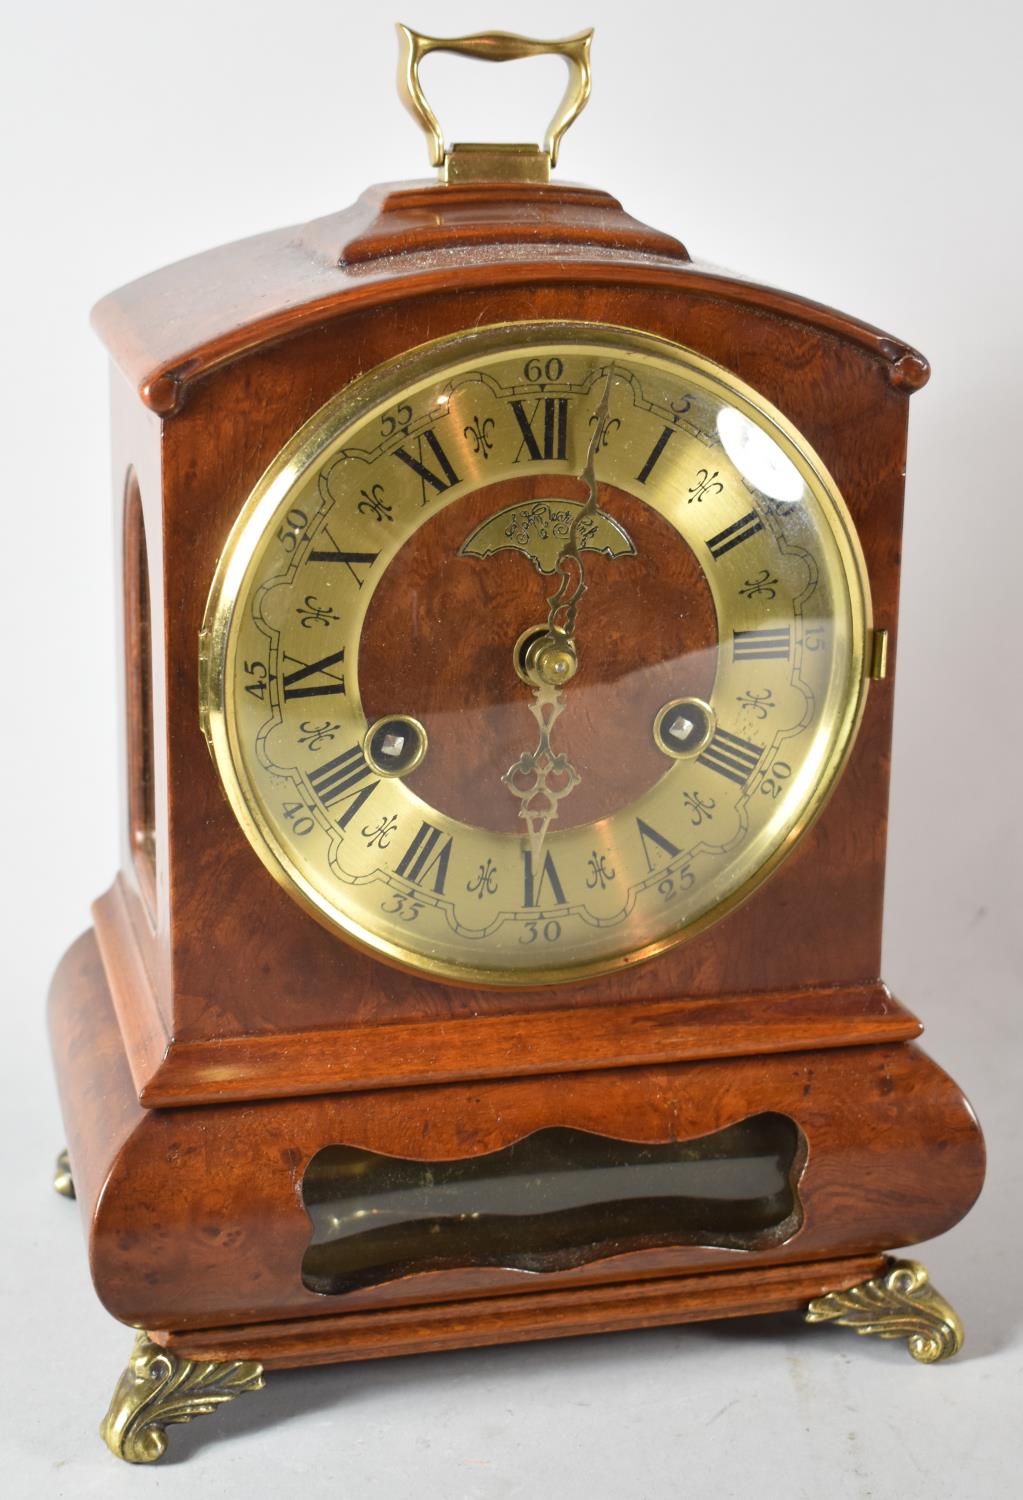 A Modern Burr Walnut Cased Ormolu Mounted Mantle Clock by WBA with Key and Working, 26cm high